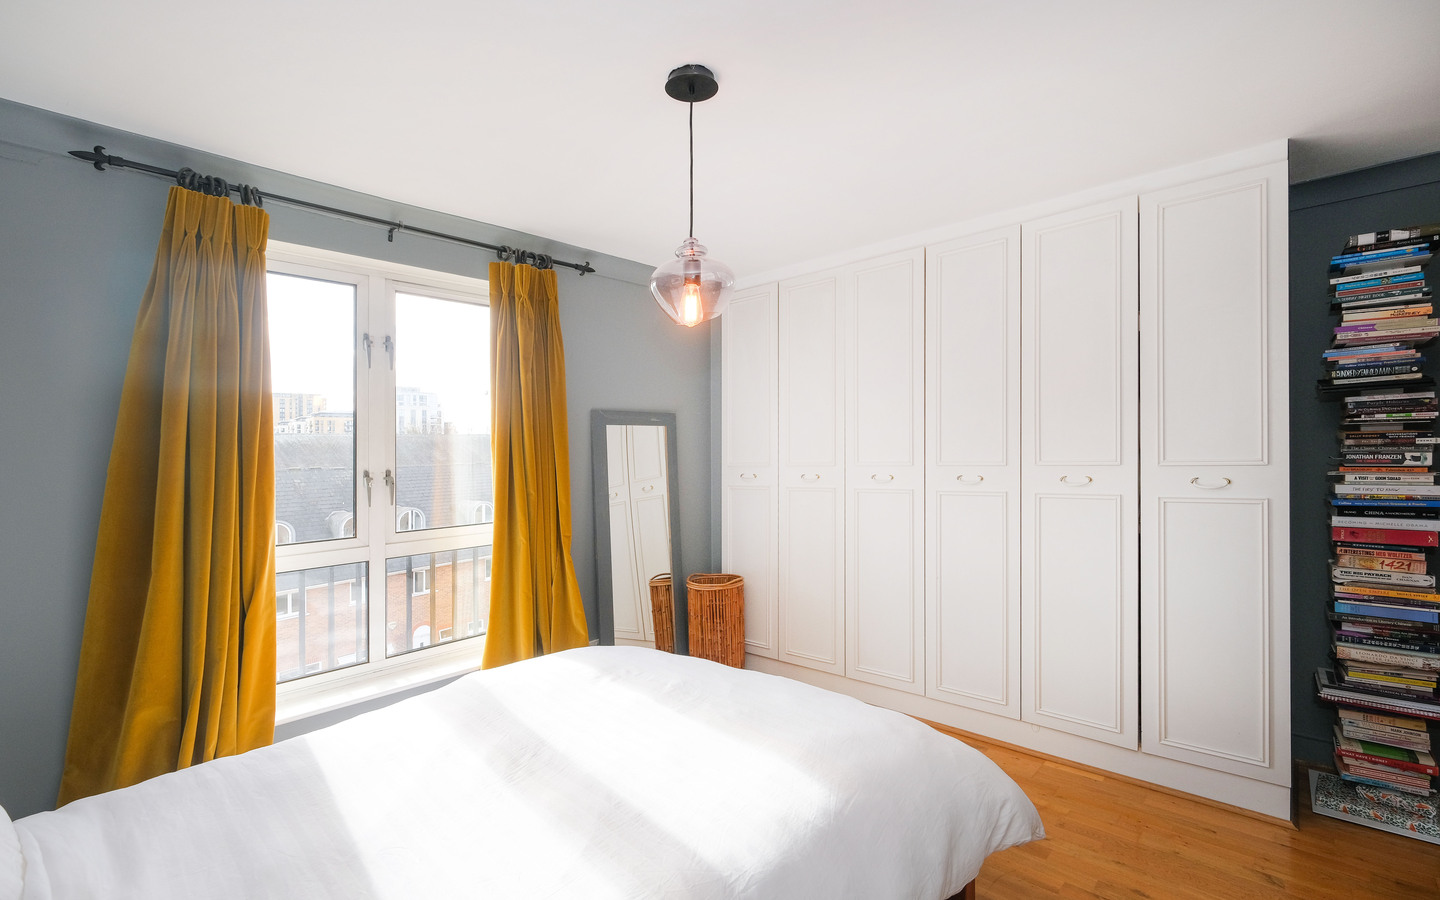 2 Bedroom Flat For Rent - London - E3 5SA